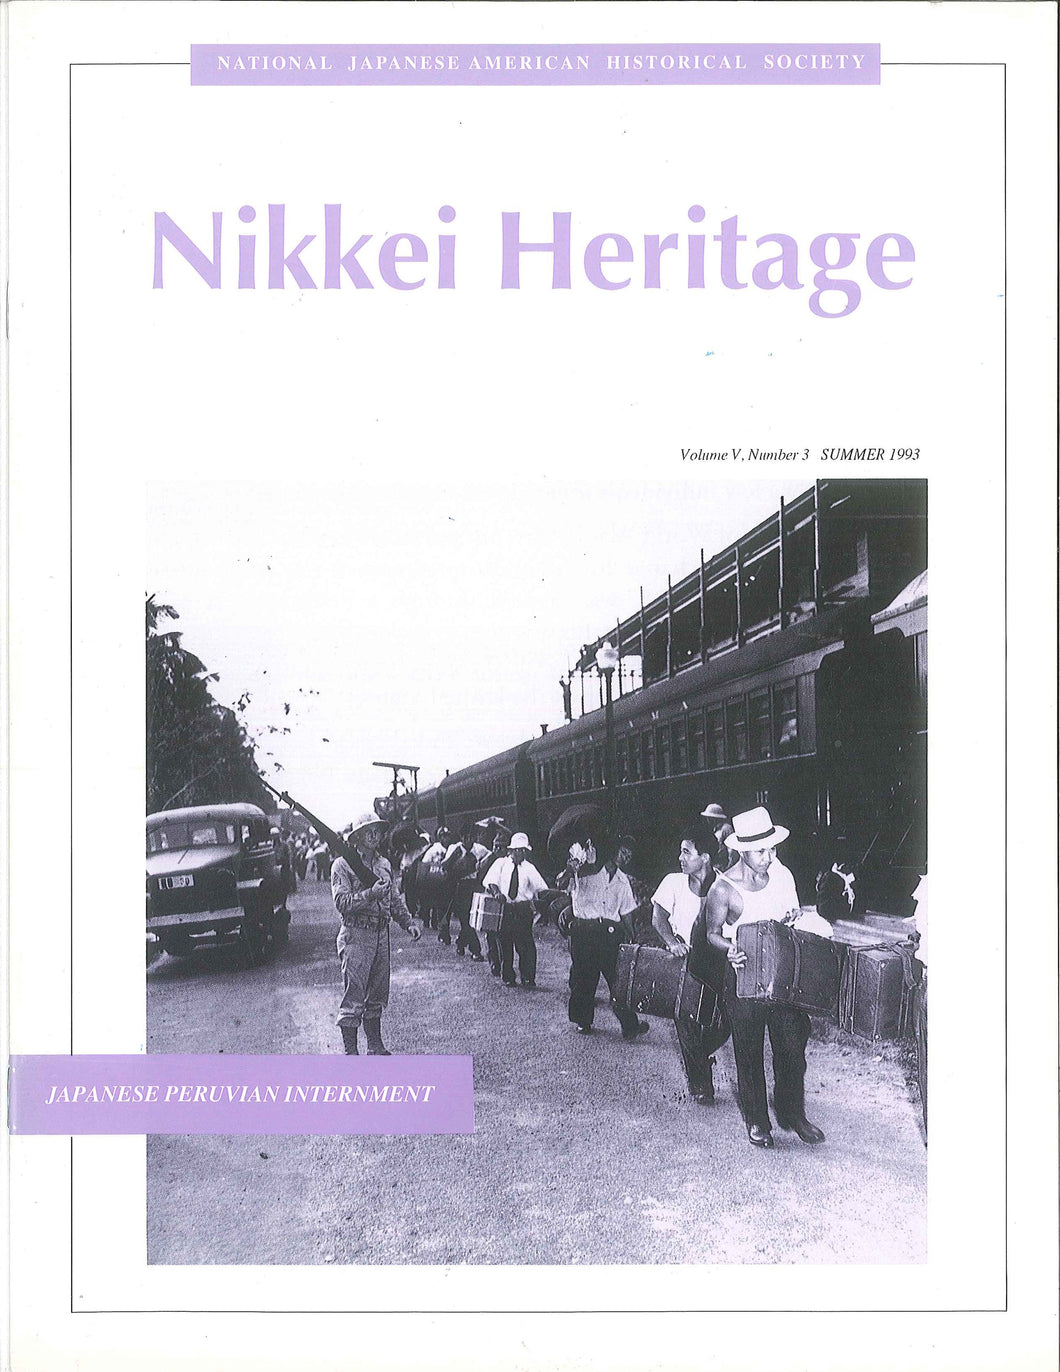 Nikkei Heritage - Japanese Peruvian Internment